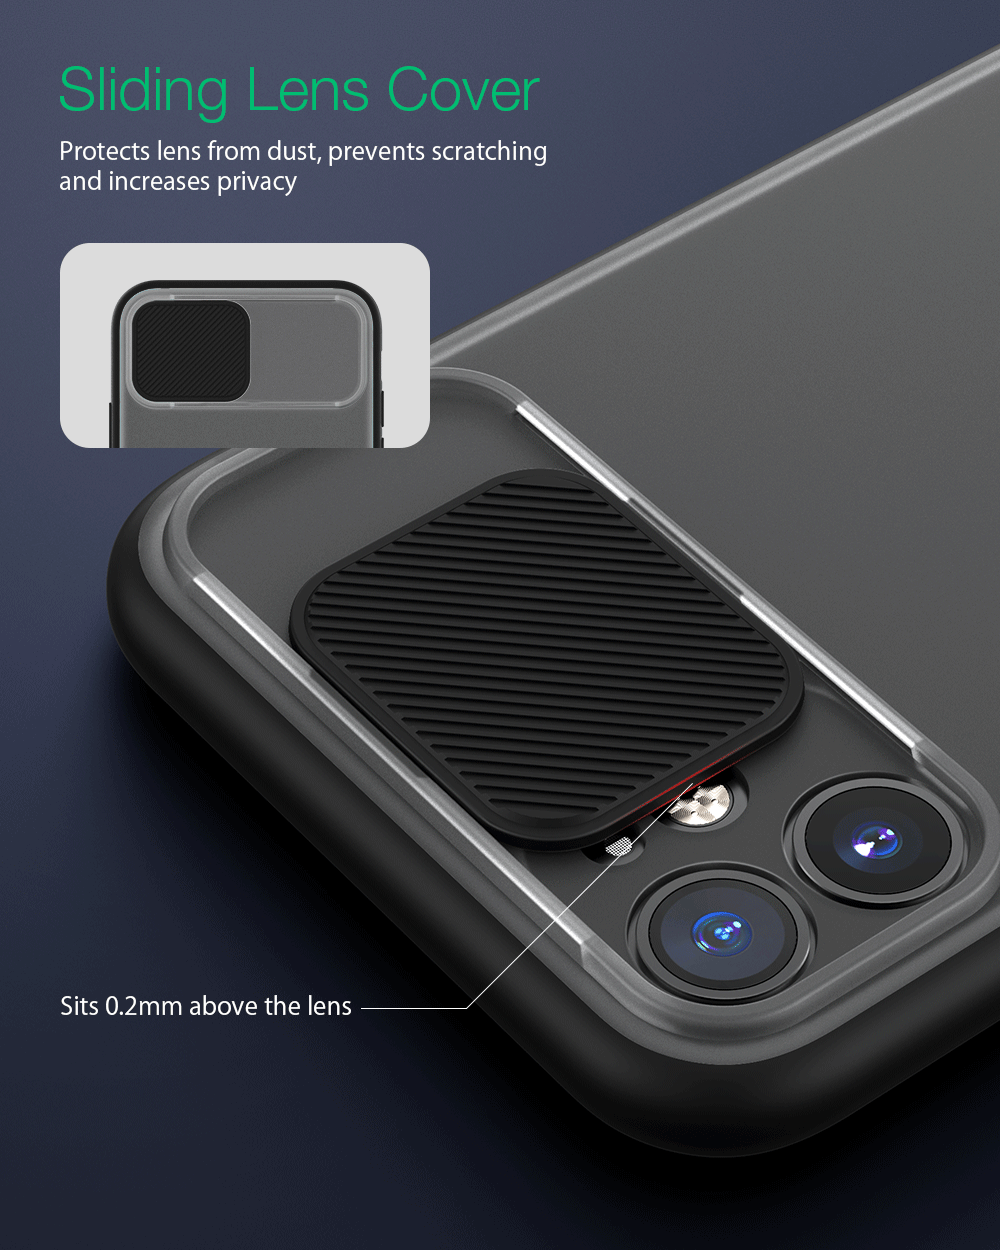 BlitzWolf® BW-AY2 Anti-Hacker Peeping Slide Lens Cover Shockproof Anti-scratch Translucent Protective Case for iPhone 11 / for iPhone 11 Pro / for iPhone 11 Pro Max